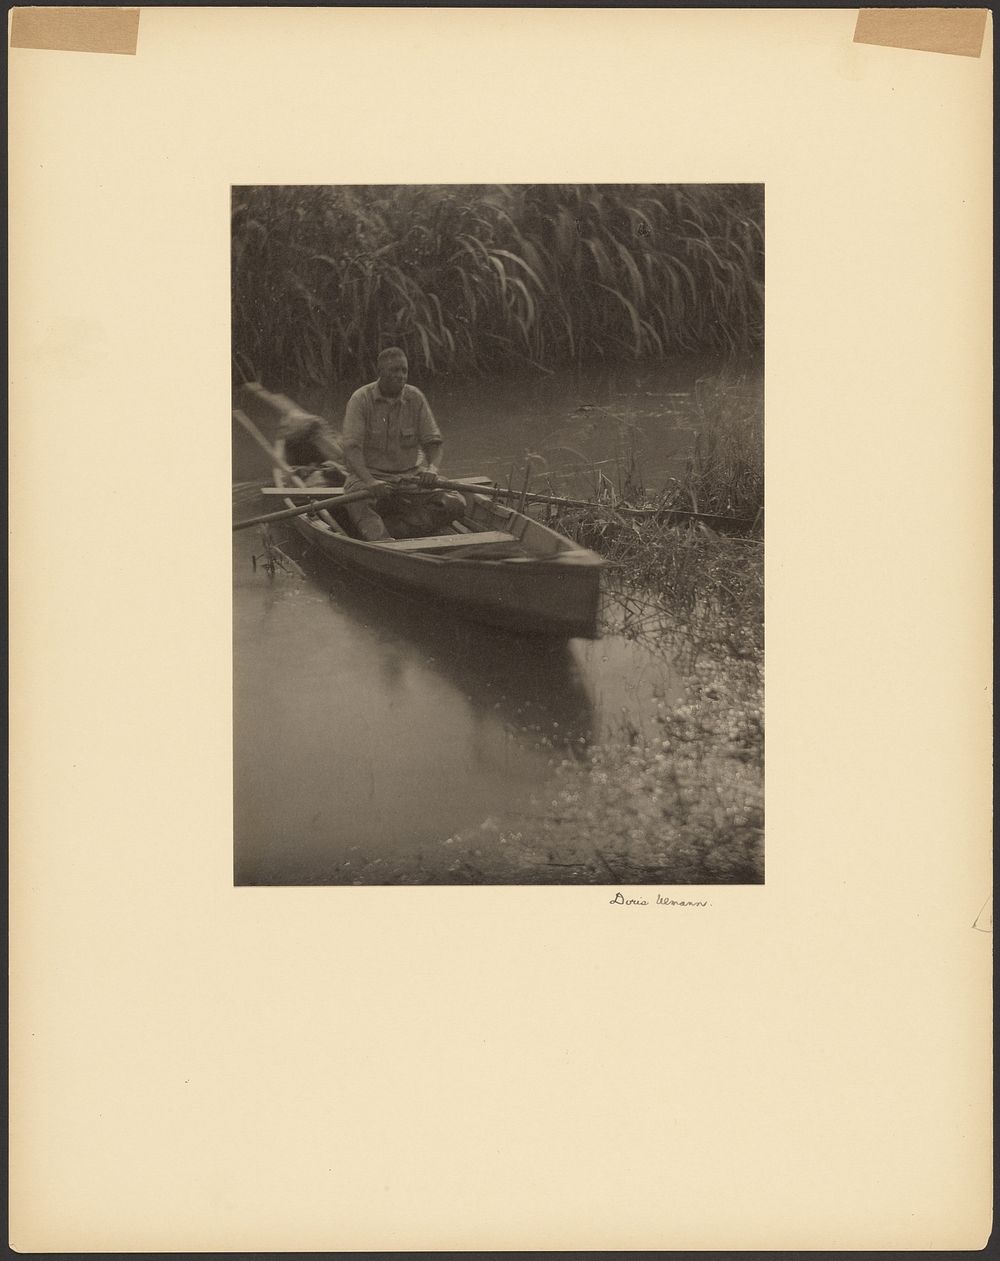 Black Man Rowing a Small Boat by Doris Ulmann